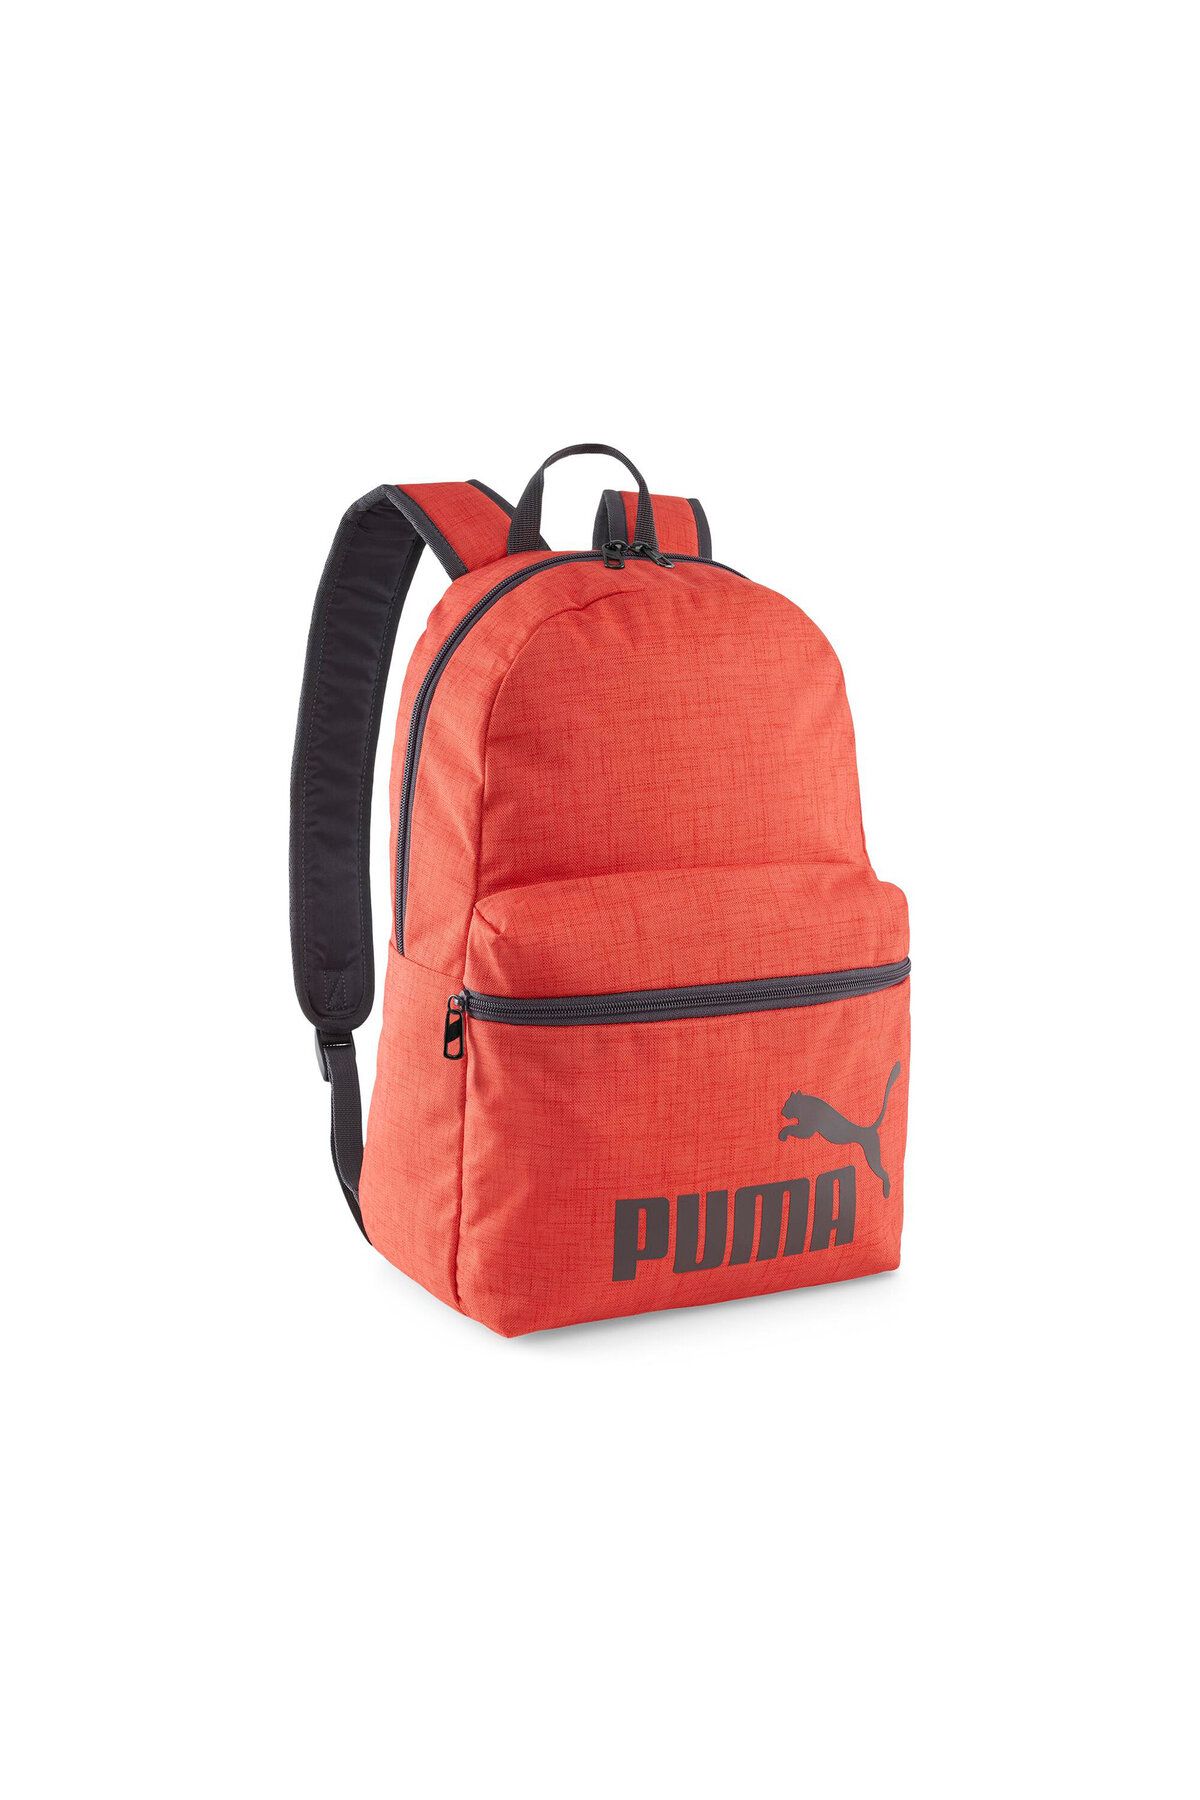 Puma Phase Backpack III Sırt Çantası 9011802 Kırmızı